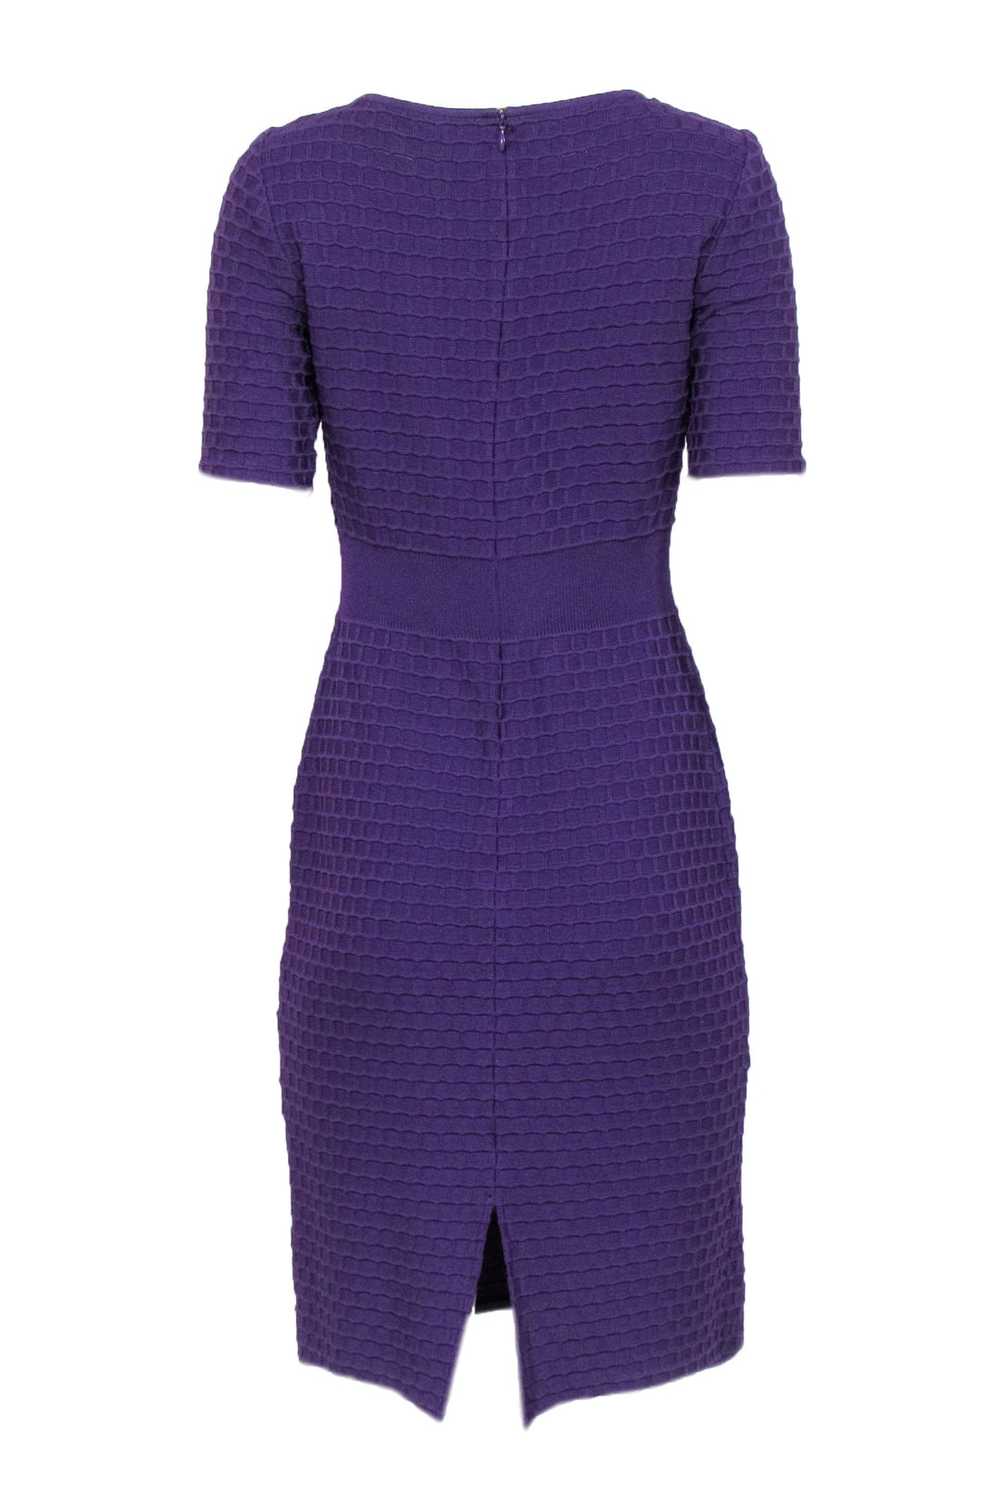 St. John - Purple Textured Knit Sheath Dress Sz 4 - image 3